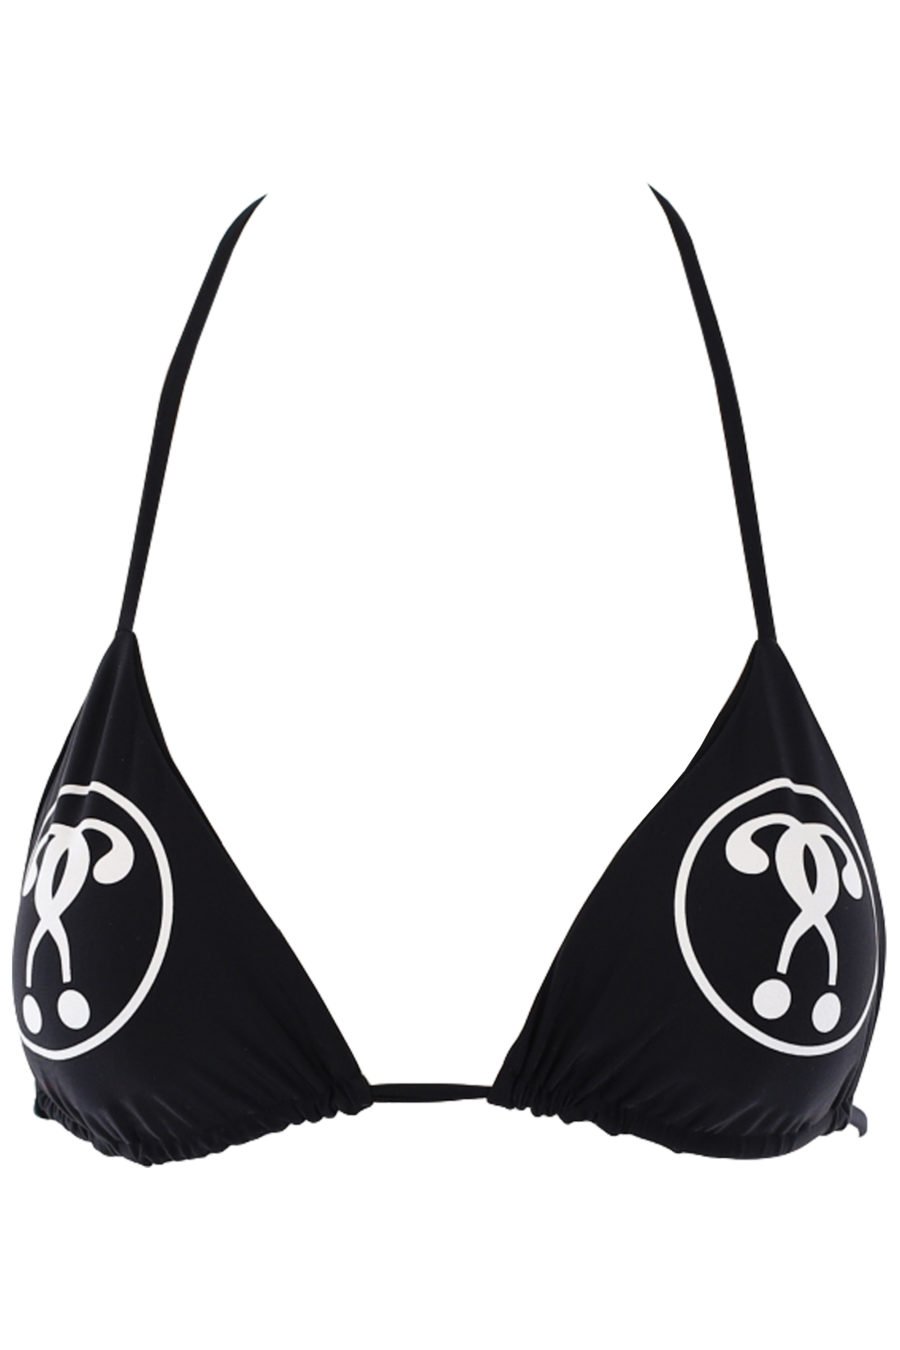 Black bikini top with double question logo - IMG 0777